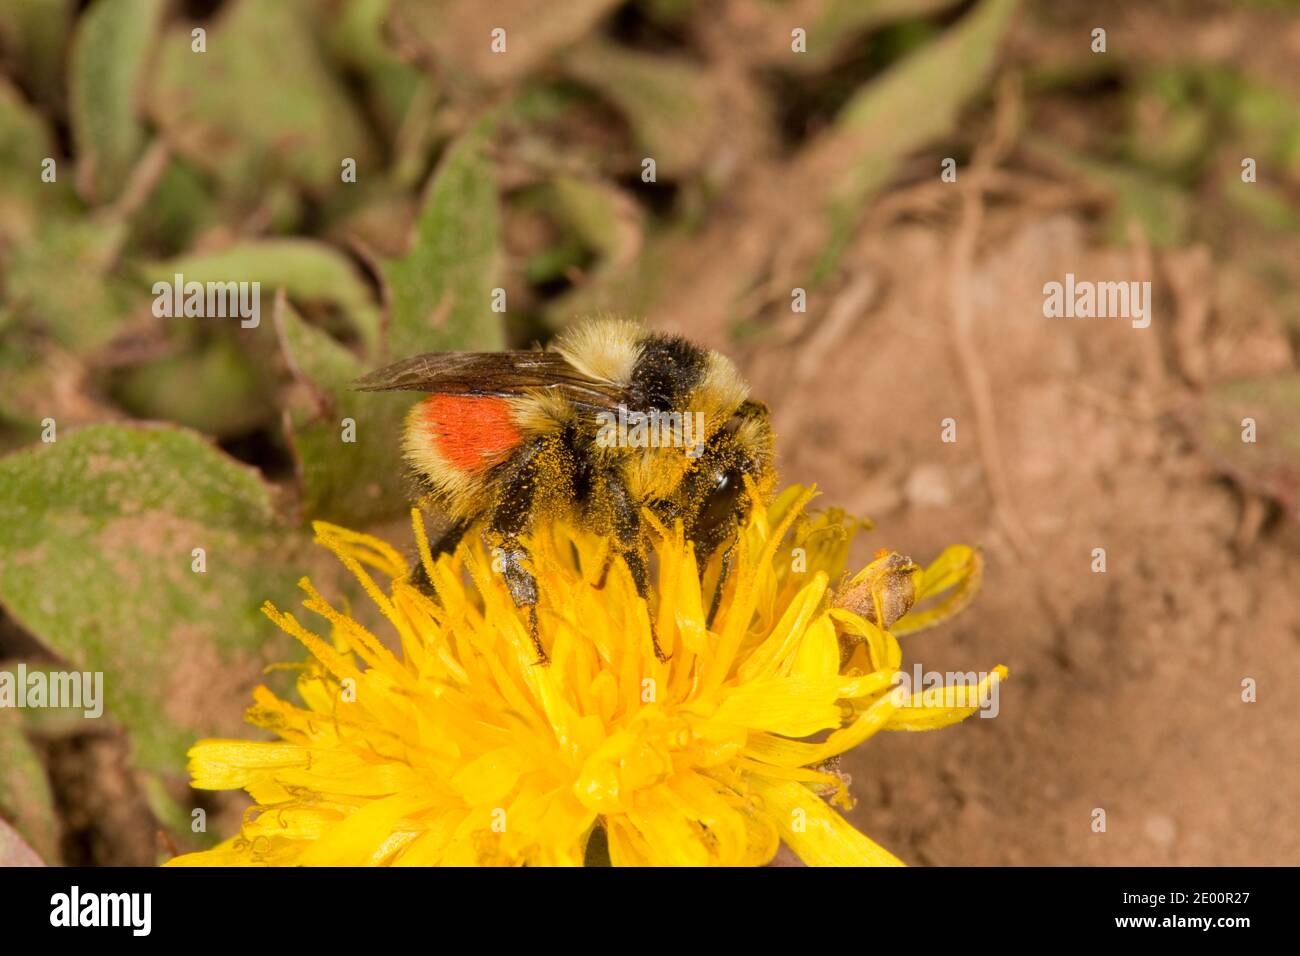 Hunt's Bumble Bee, Bombus huntii, Apidae. Nectaring auf Löwenzahn Blume. Stockfoto